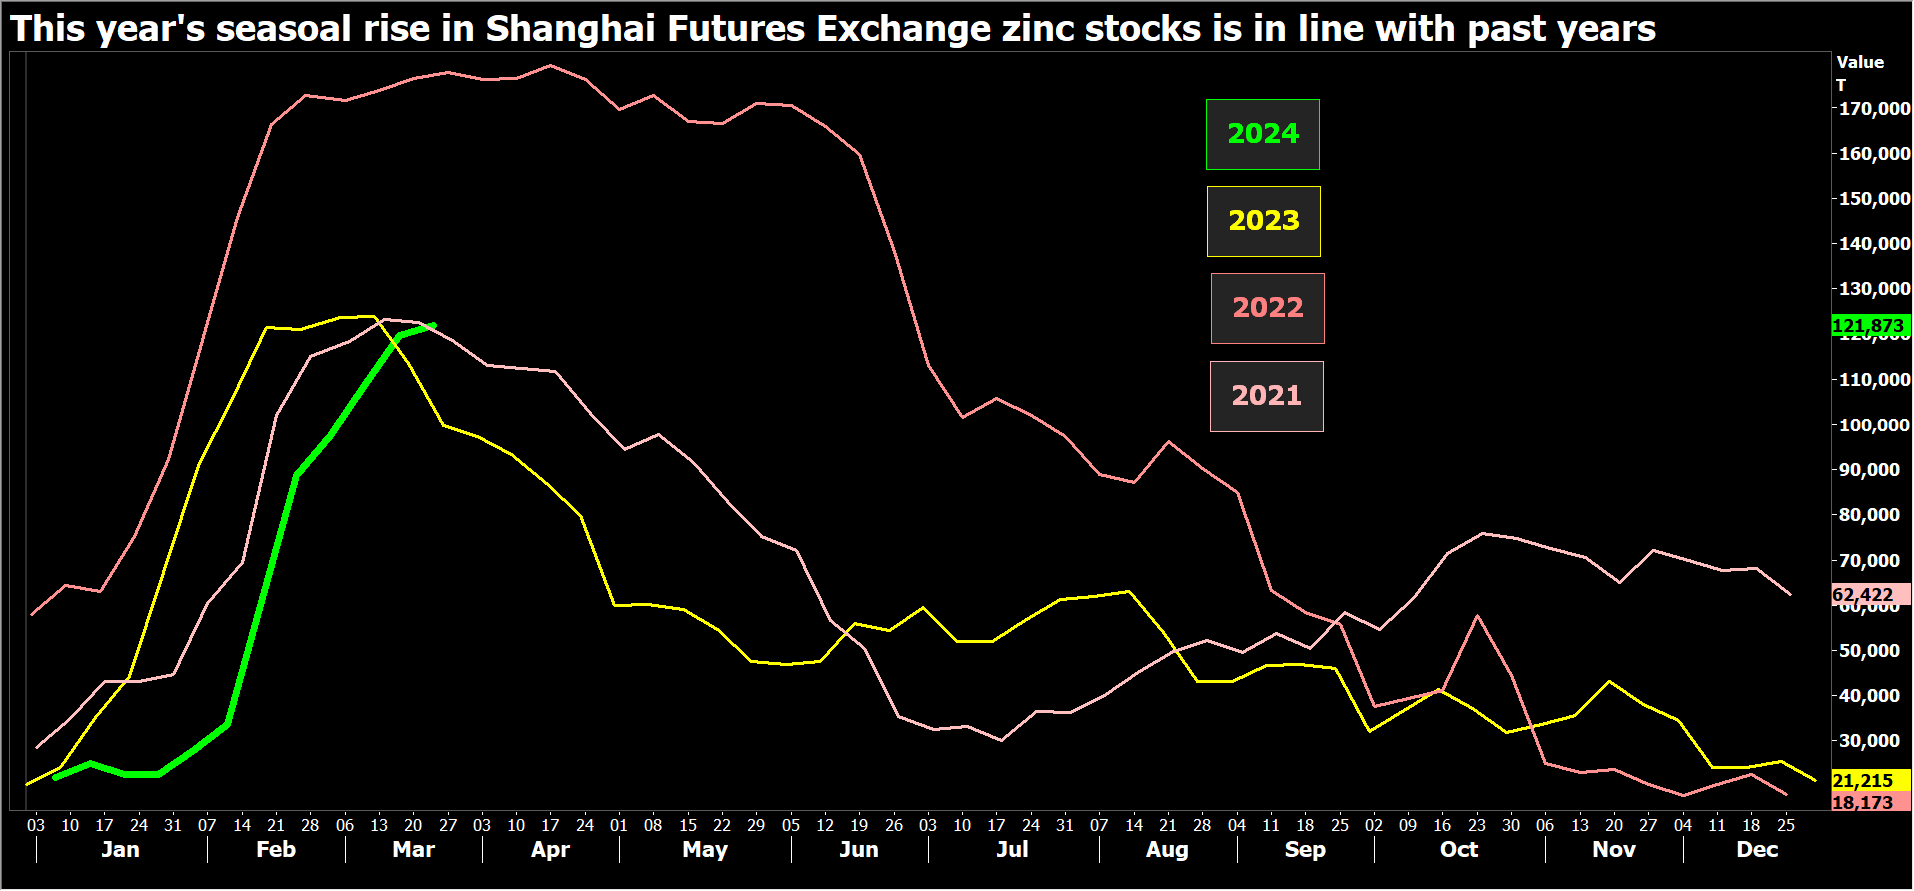 Shanghai Futures Exchange zinc stocks seasonal